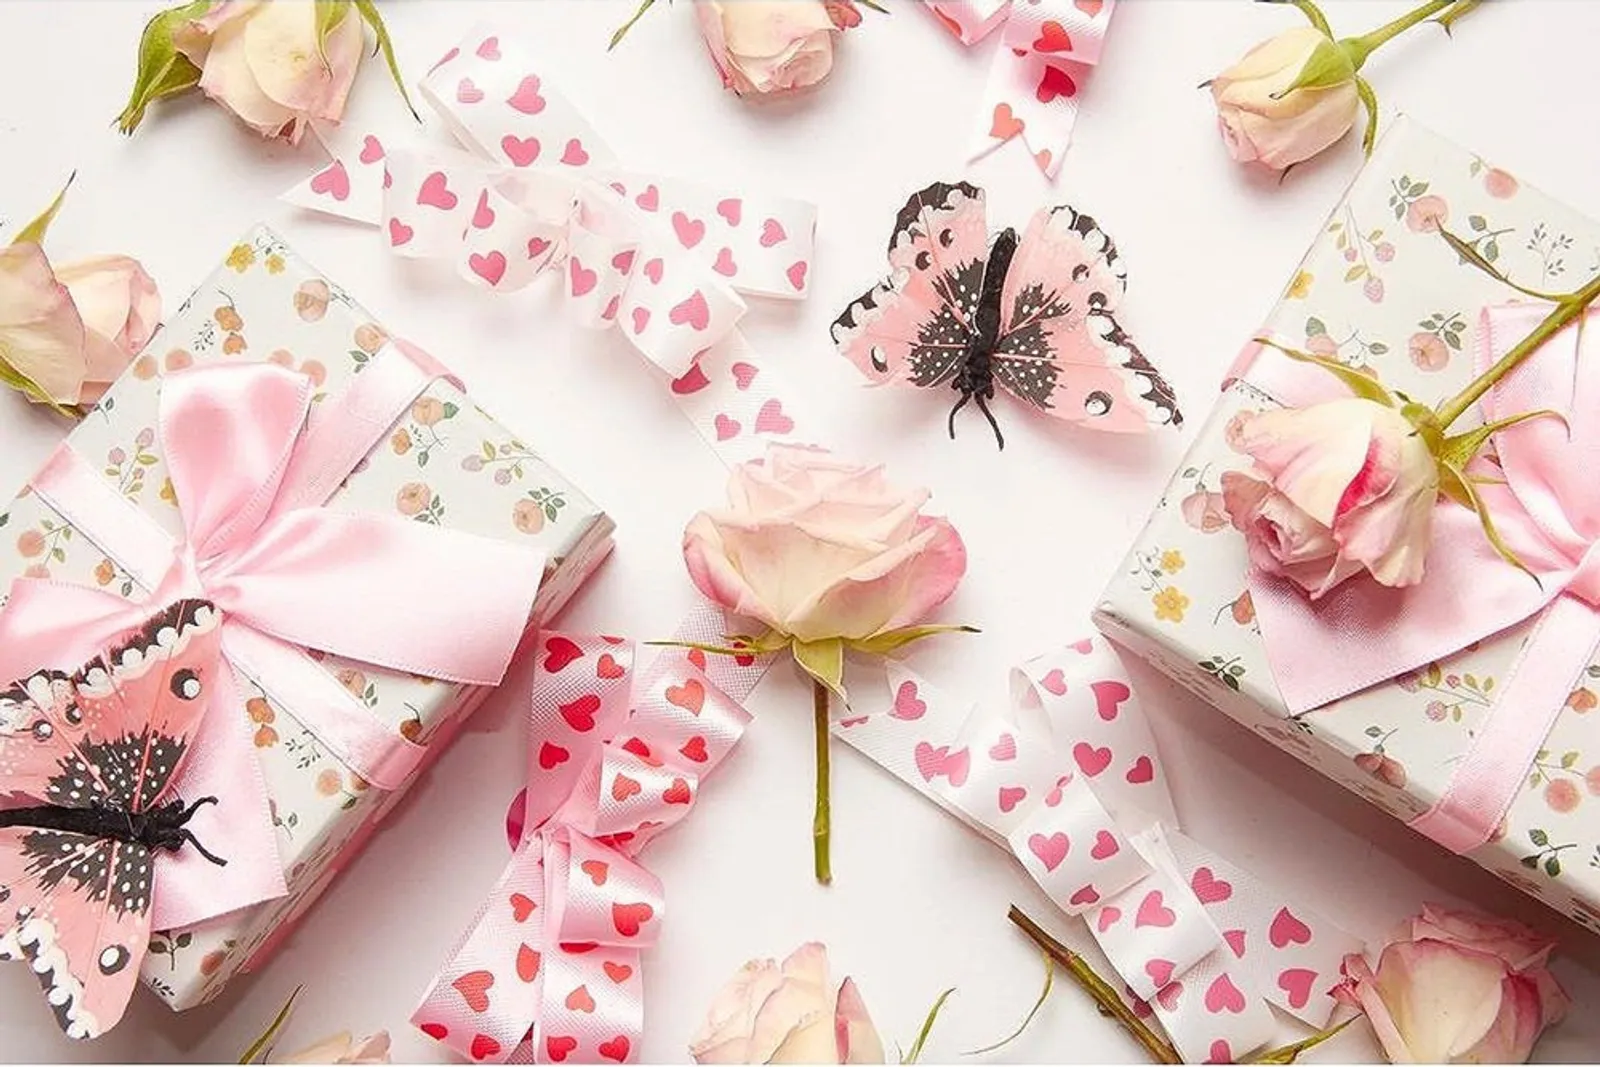 Bingung Cari Hadiah untuk Pasangan? Dapatkan Inspirasi Kado Valentine dari Para Seleb Ini!